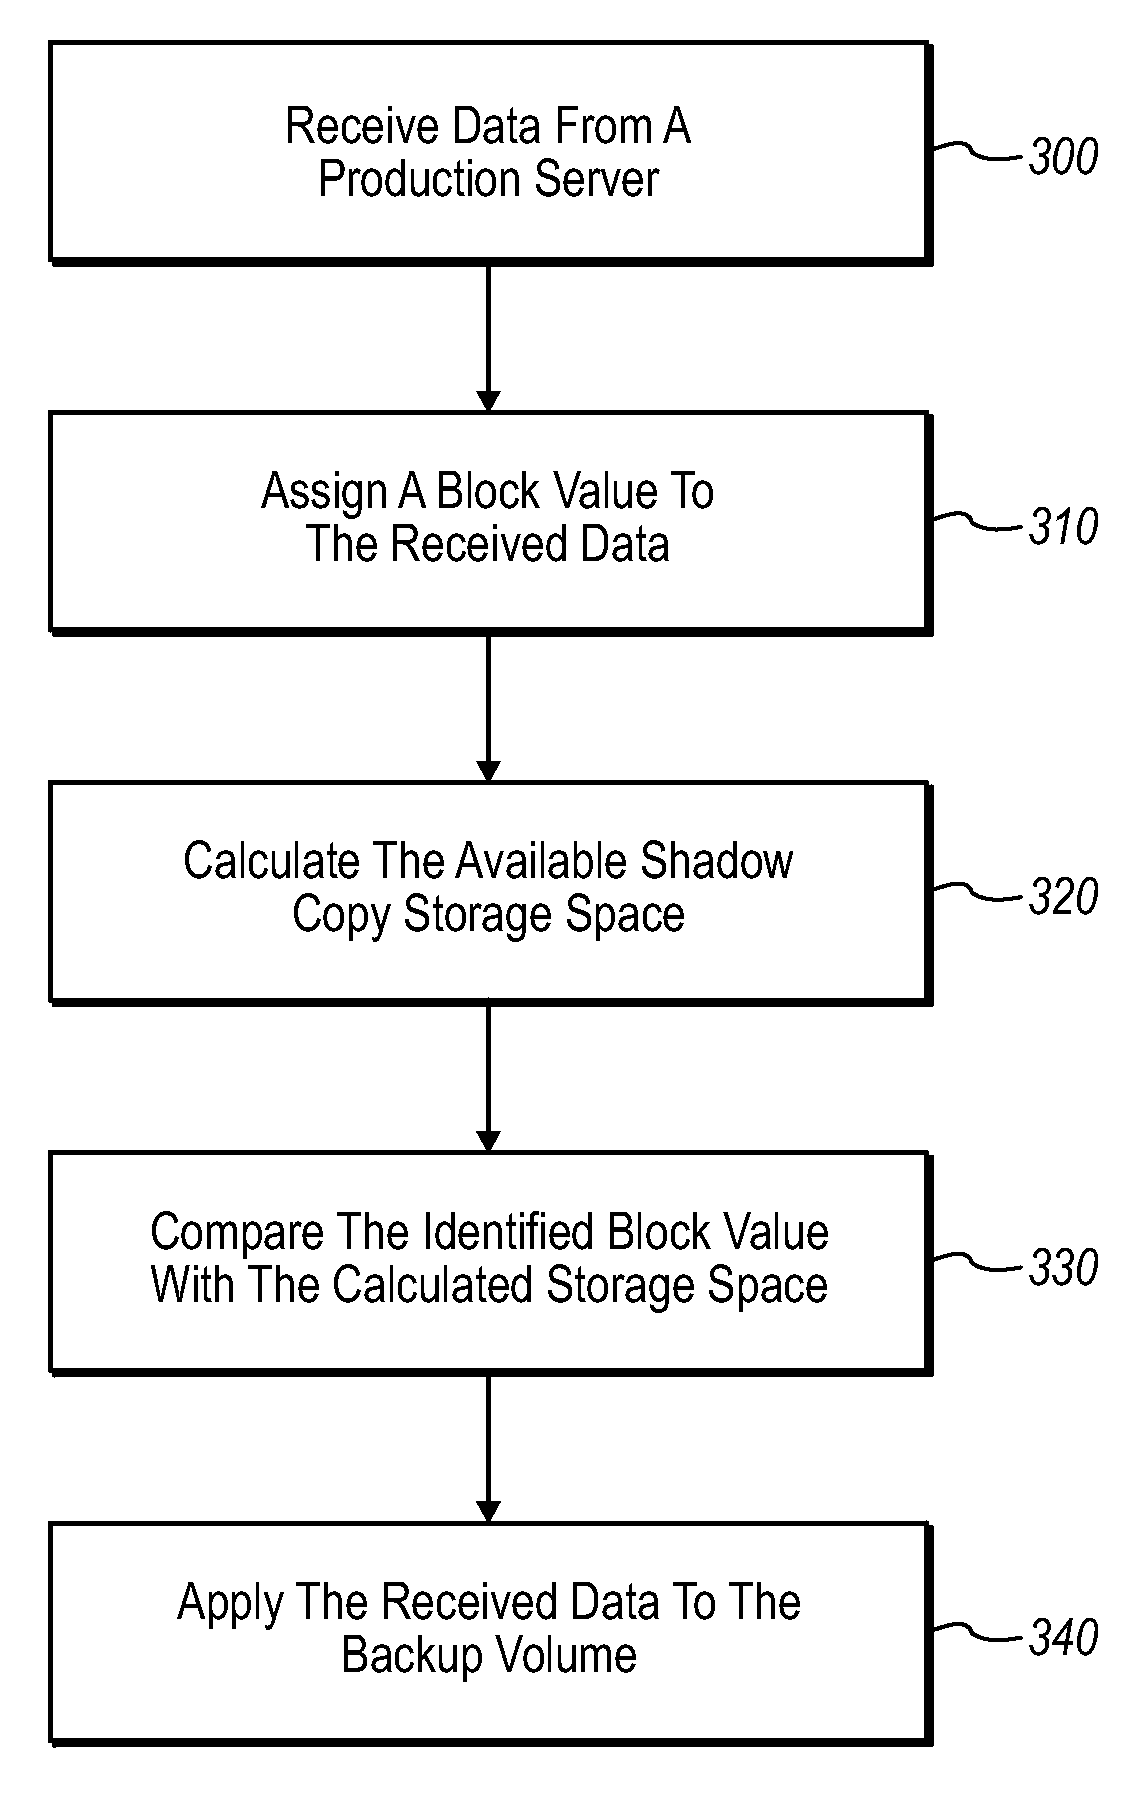 Retaining shadow copy data during replication